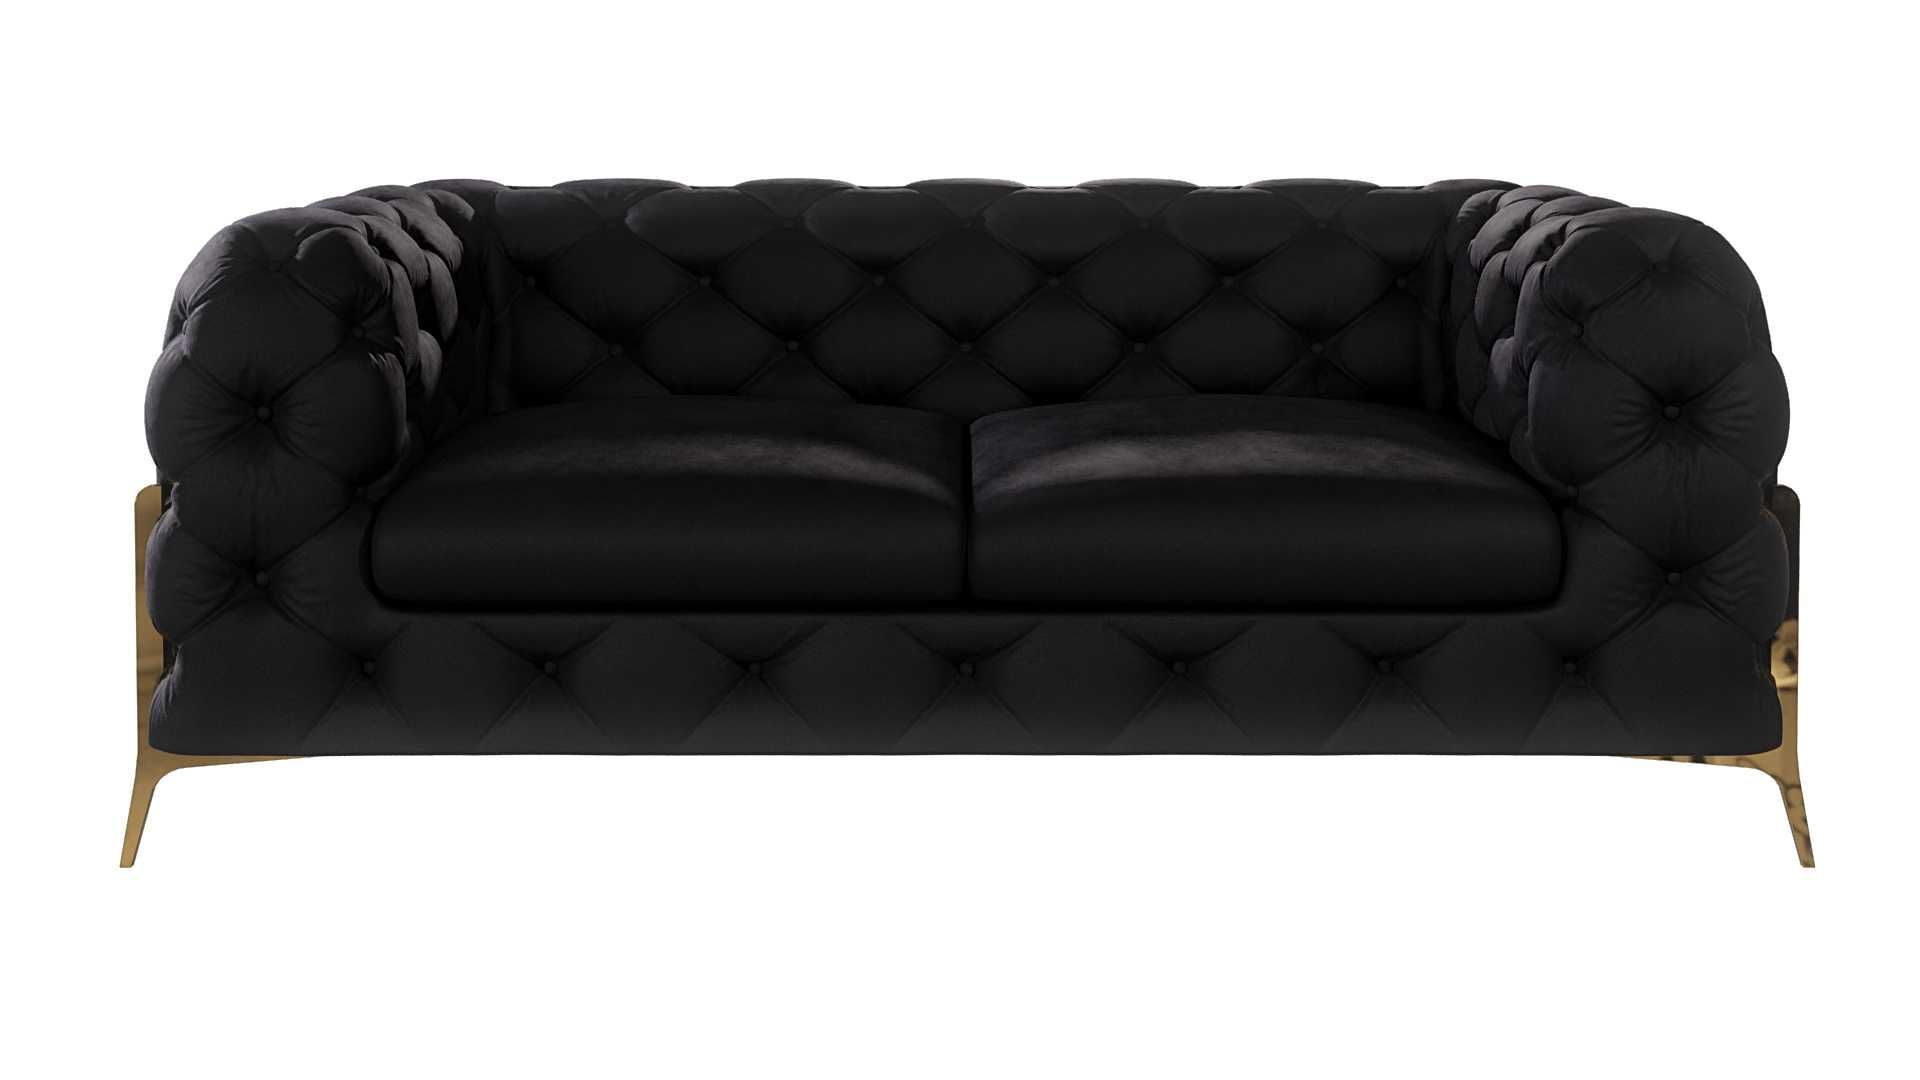 Sofa pikowana chesterfield  Teo high 2 osobowa glamour Wysyłka 48h